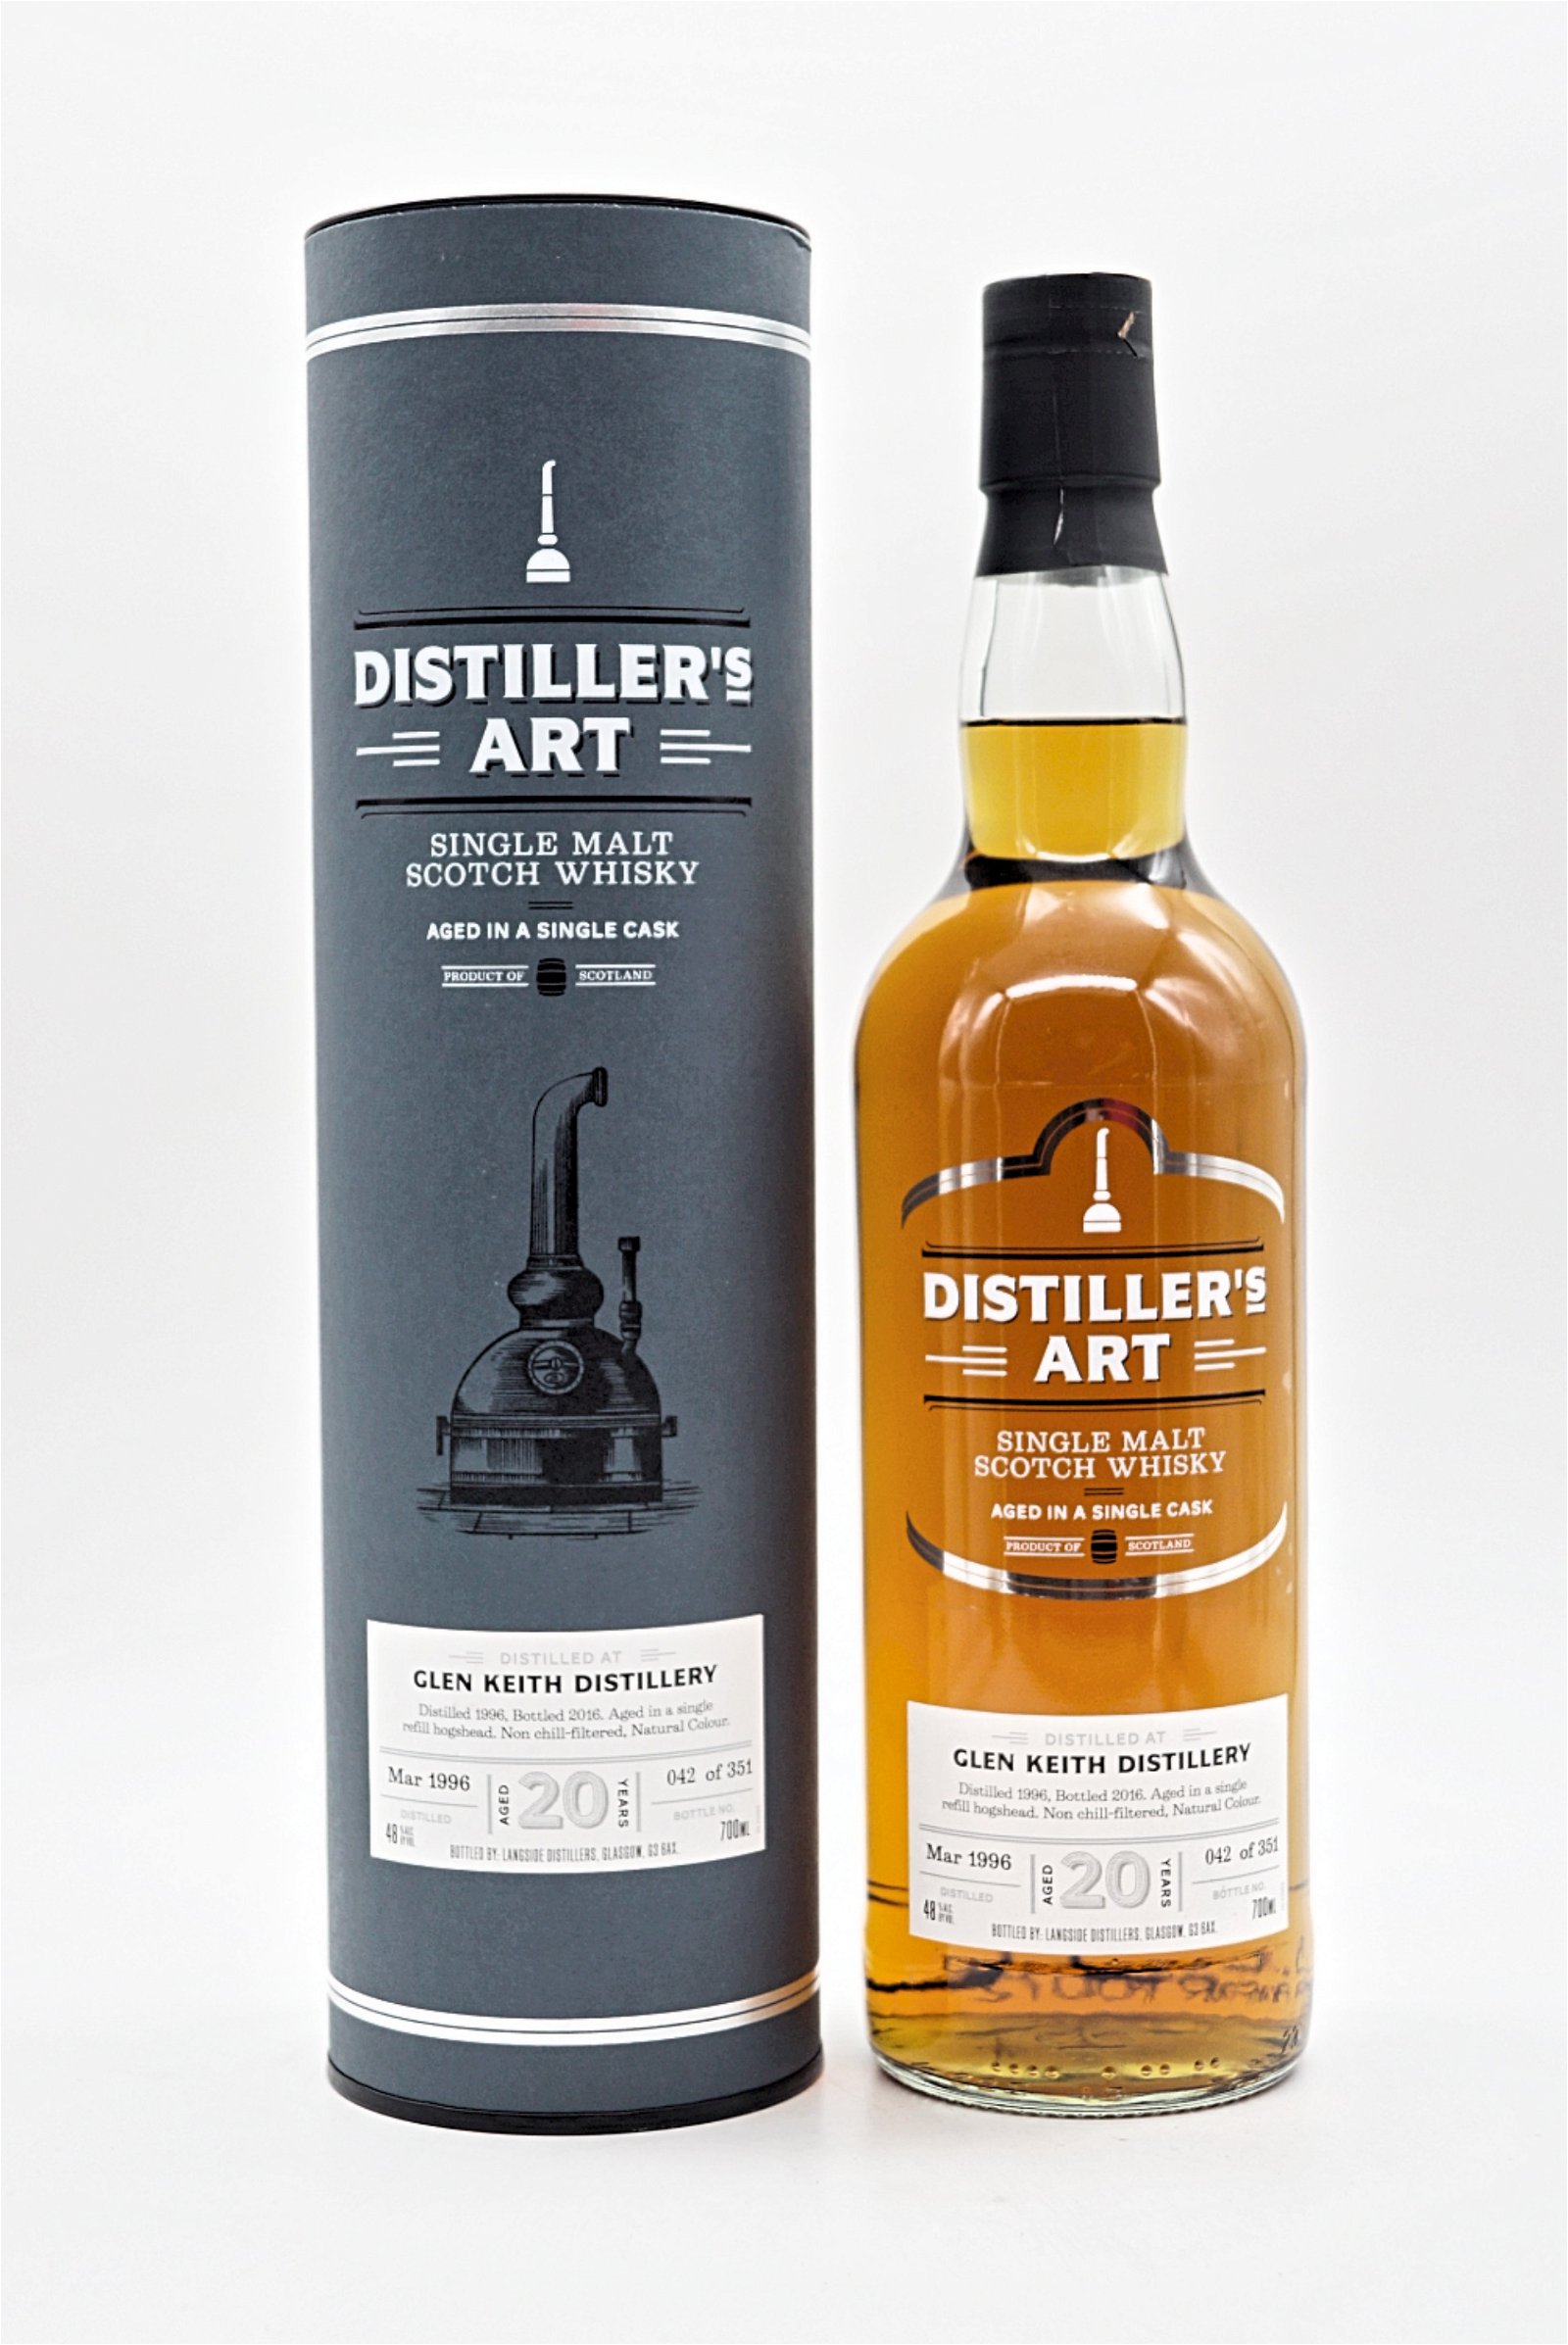 Distillers Art Glen Keith Distillery 20 Jahre 48% 351 Fl. Single Cask Single Malt Scotch Whisky